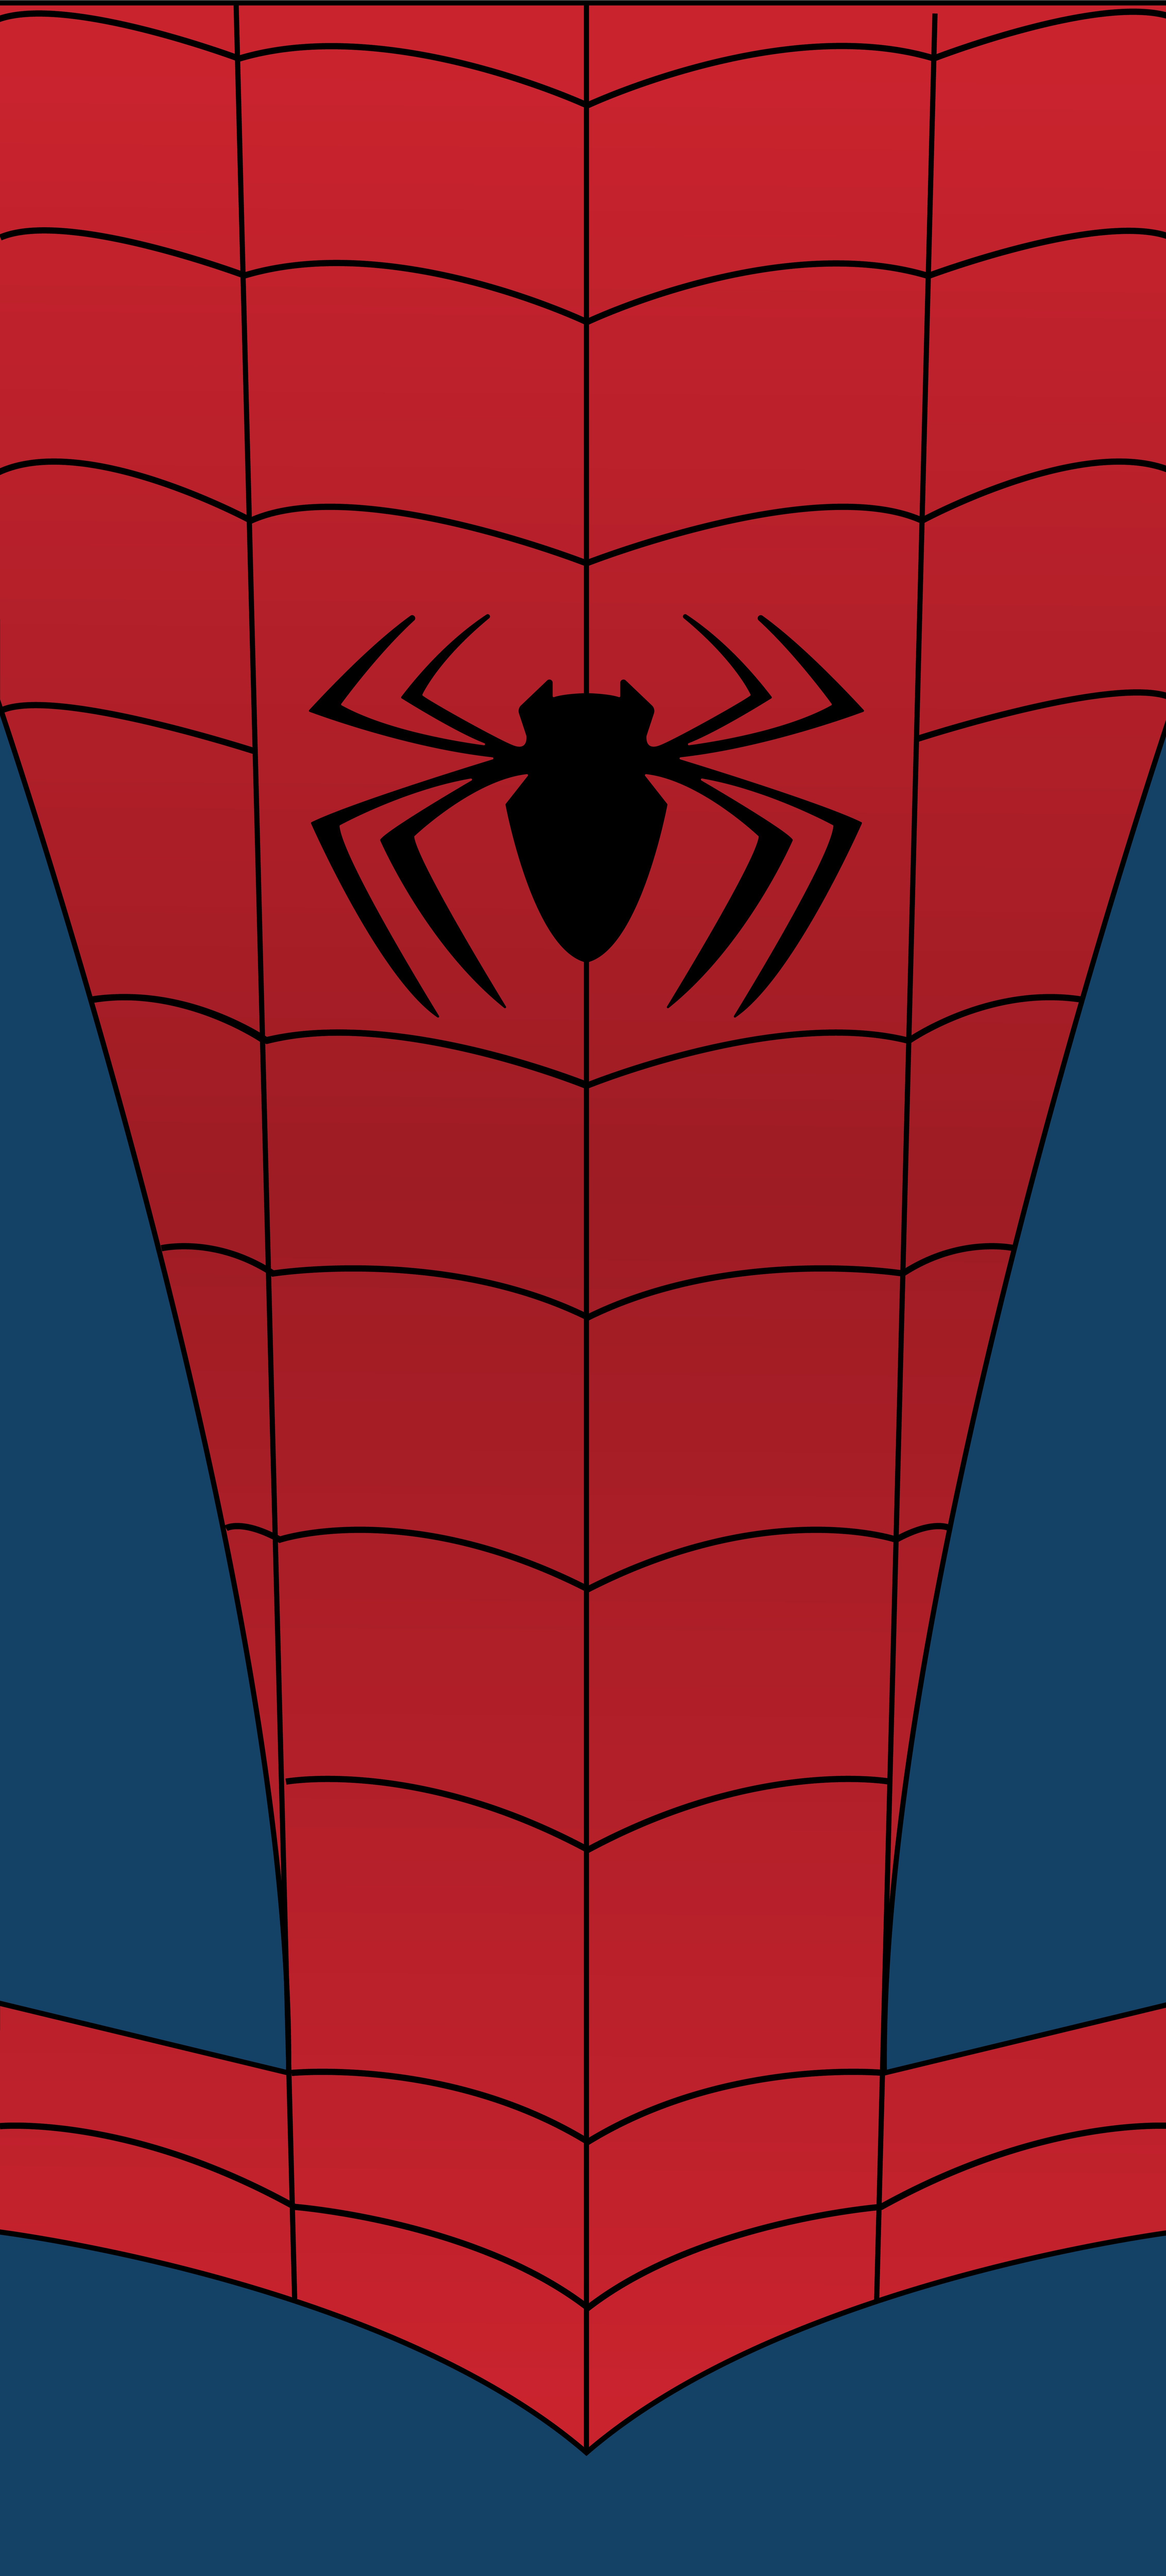 Spider Man (PS4 Classic Suit)